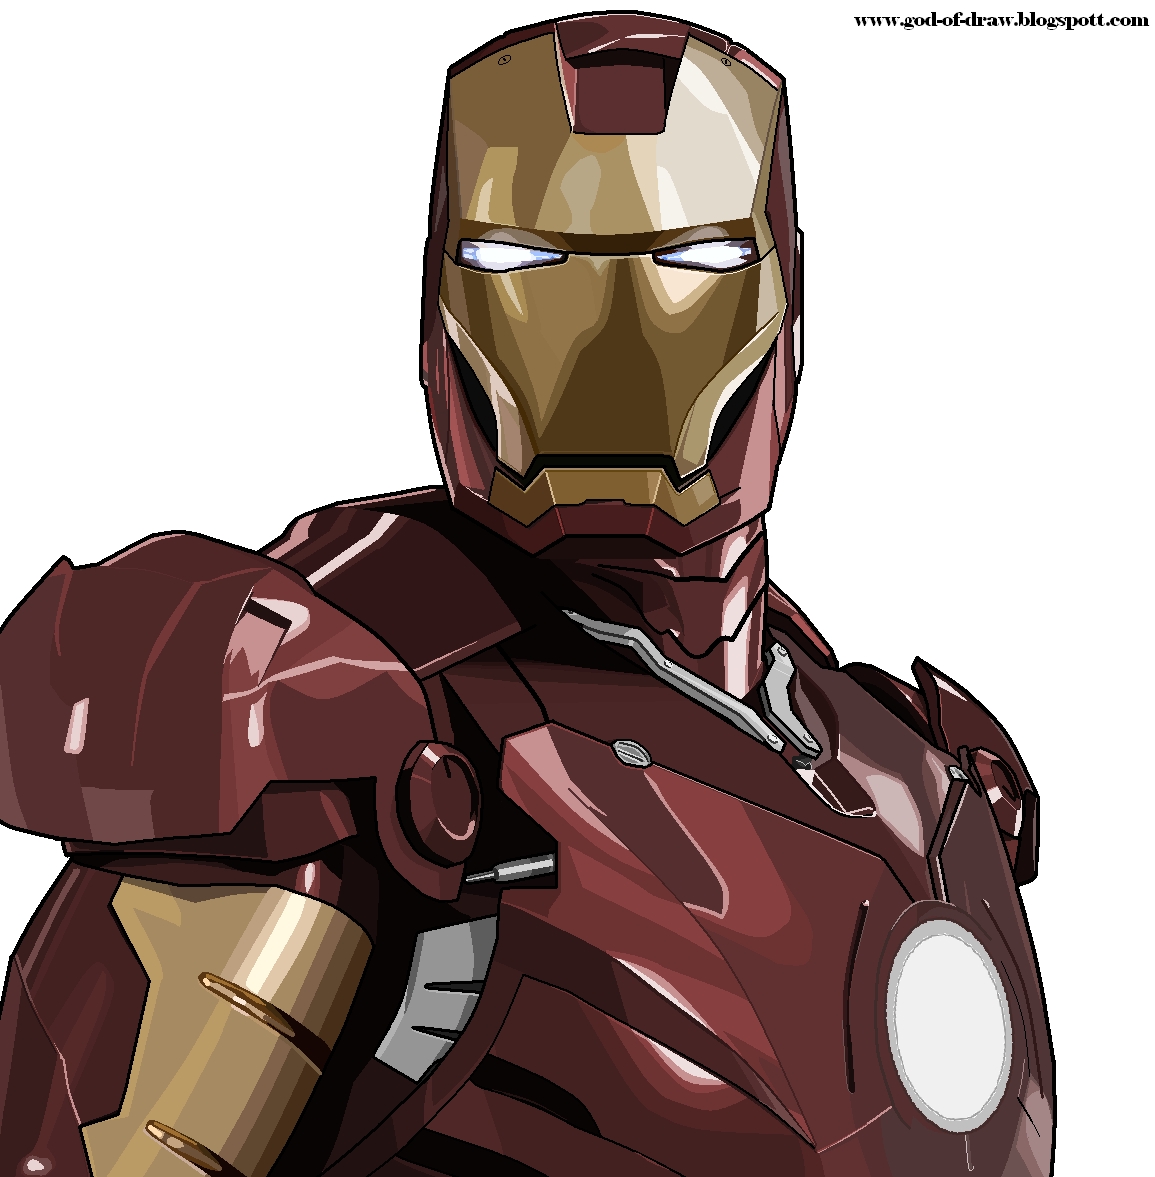 godofdraw: Iron man fan art